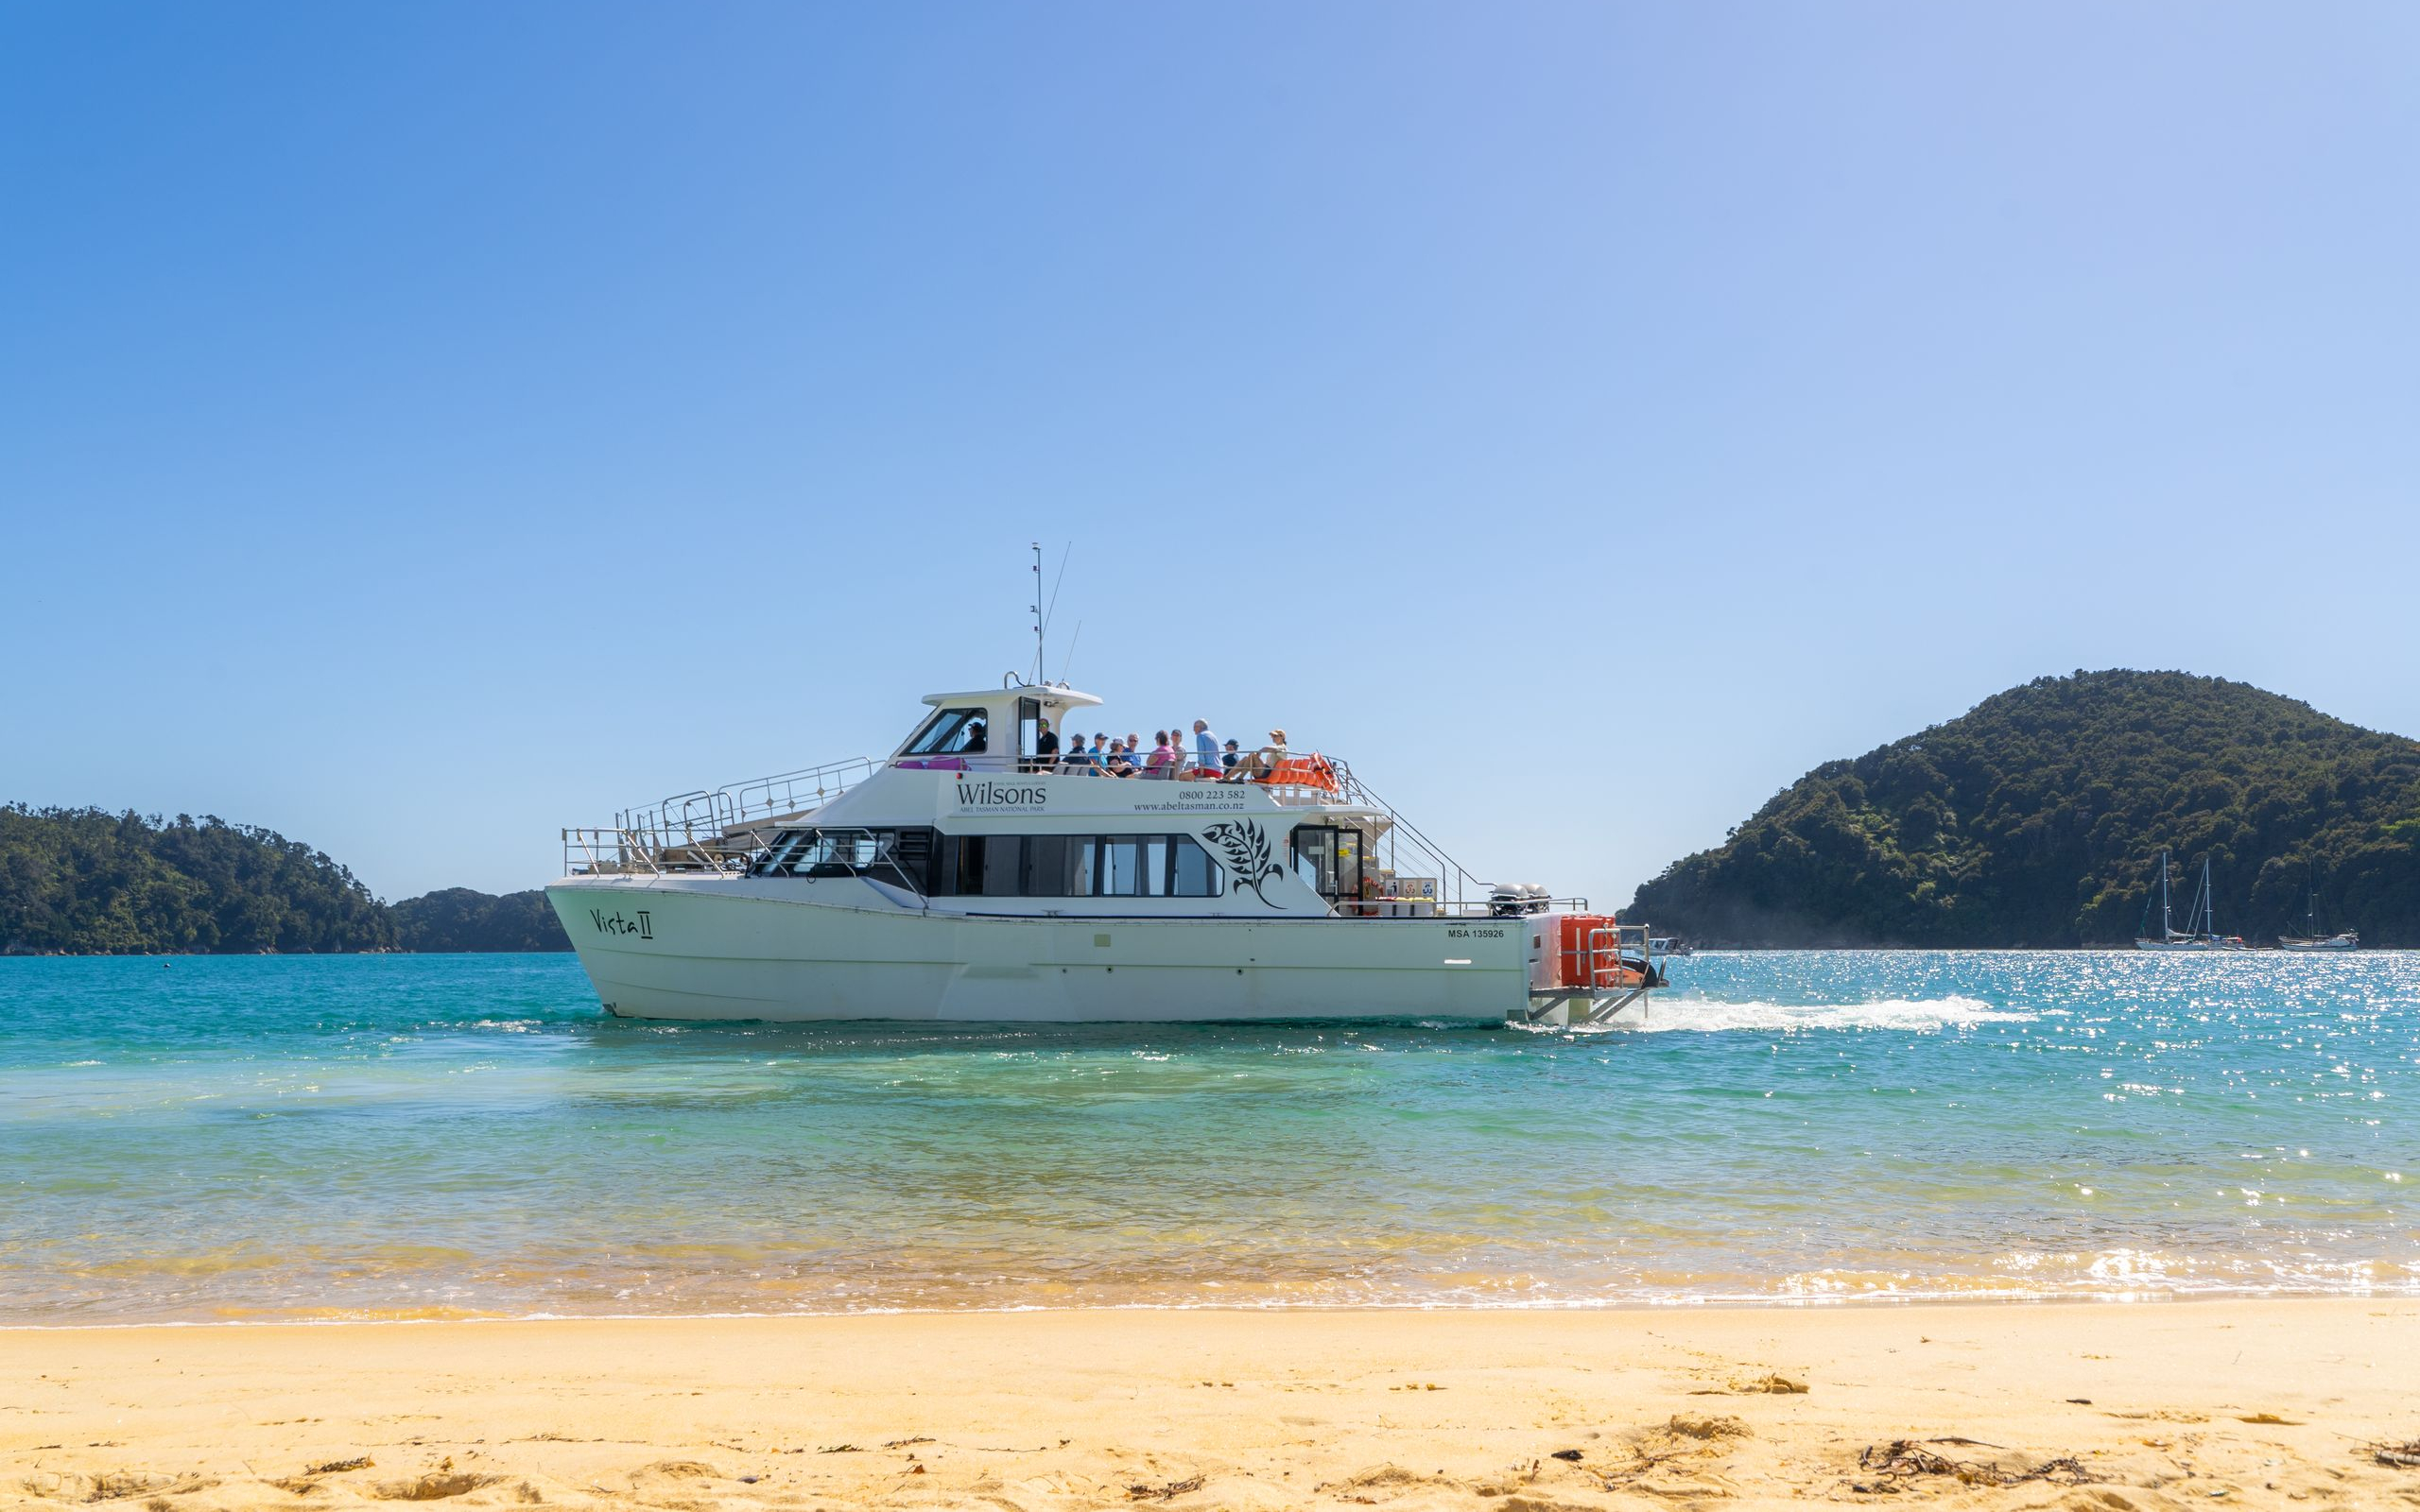 Wilsons Abel Tasman scenic boat cruise